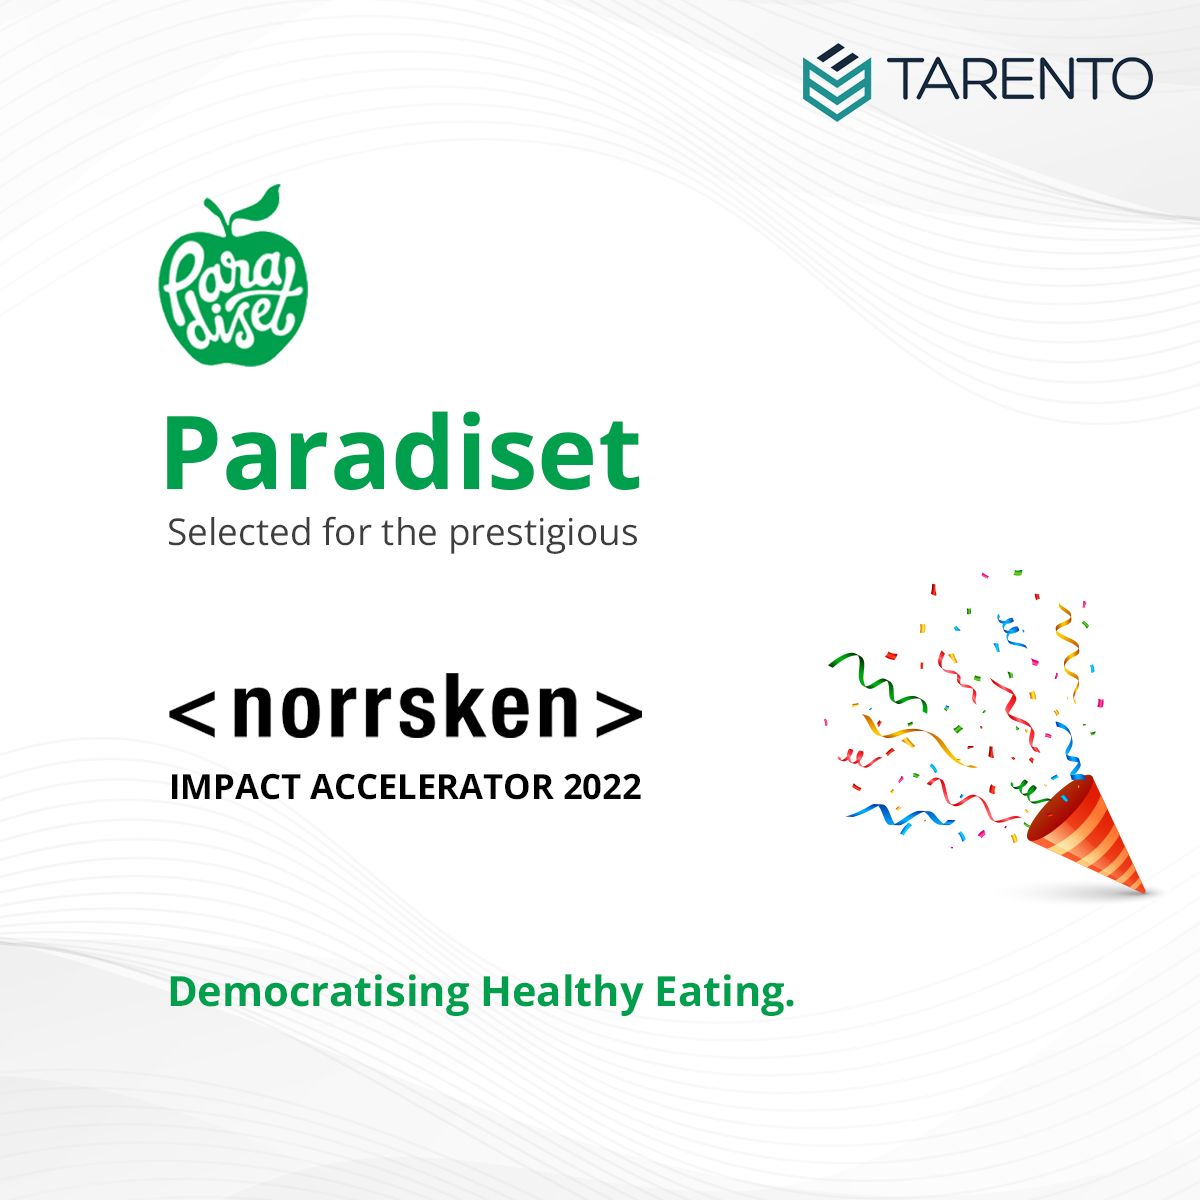 Tarento-Sweden-Customer-Success-Story-Paradiset-norrsken-impact-accelerator-2022.jpg